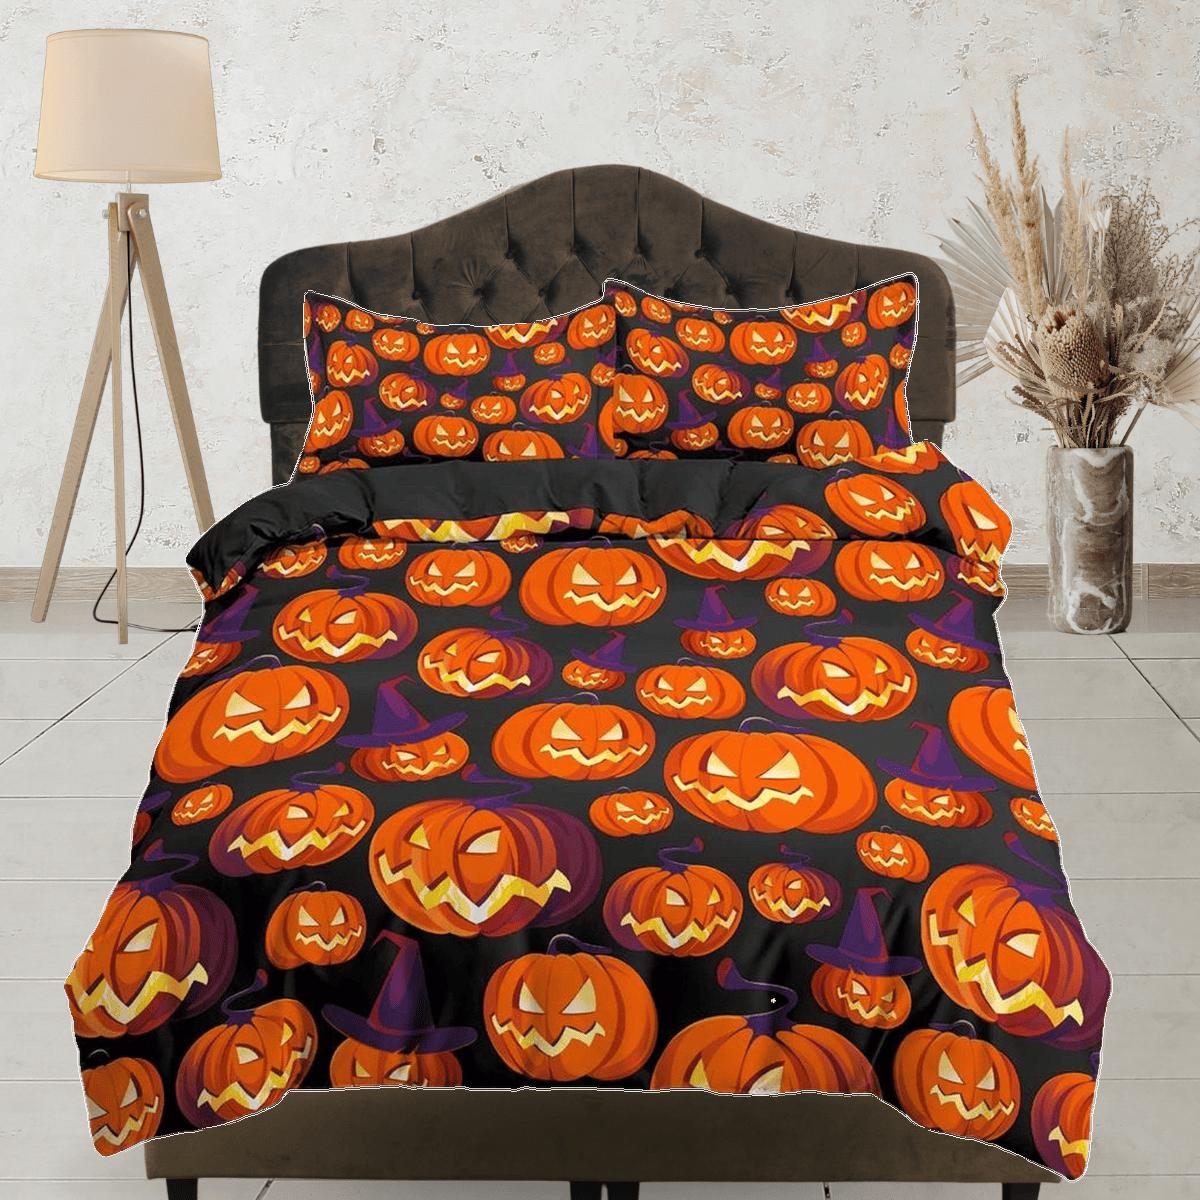 daintyduvet Pumpkin prints halloween full size bedding & pillowcase, duvet cover dorm bedding, halloween decor, nursery toddler bedding, halloween gift